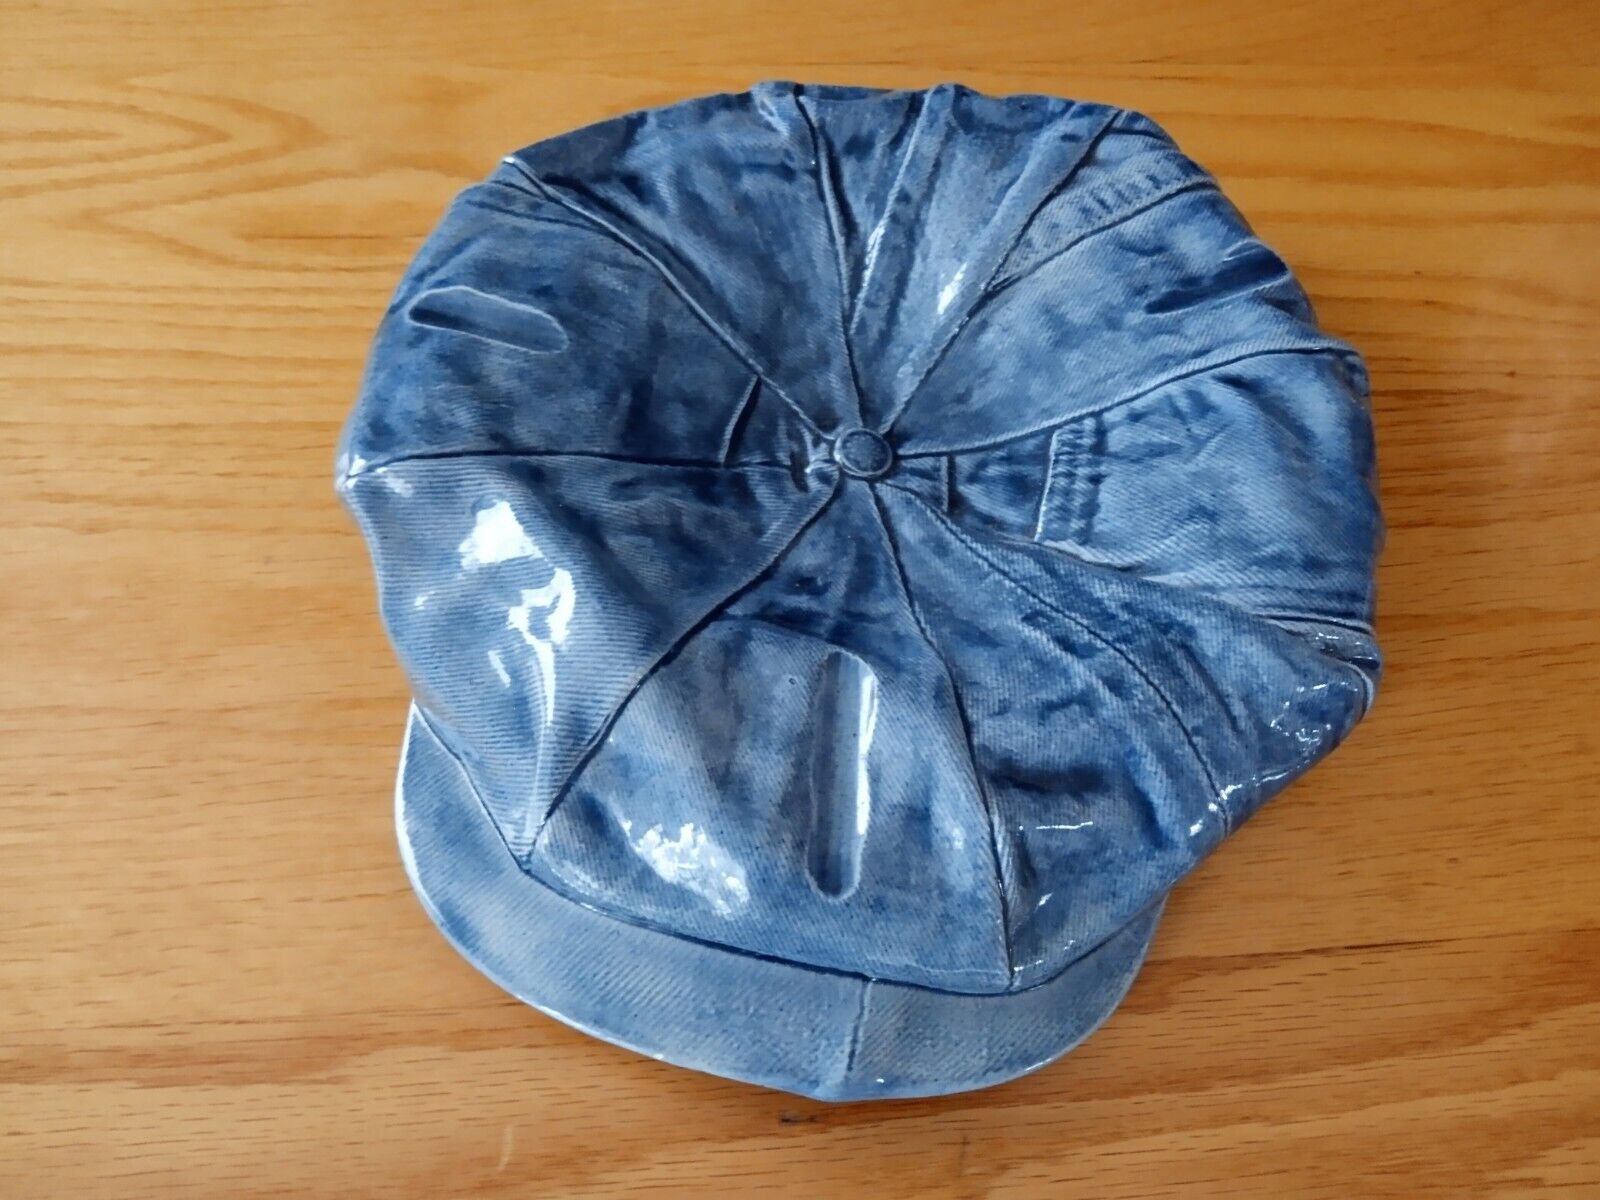 Vintage 70s Cool Hobbyist Ceramic Ashtray Cabbie Hat Cap Retro Denim Look Boho